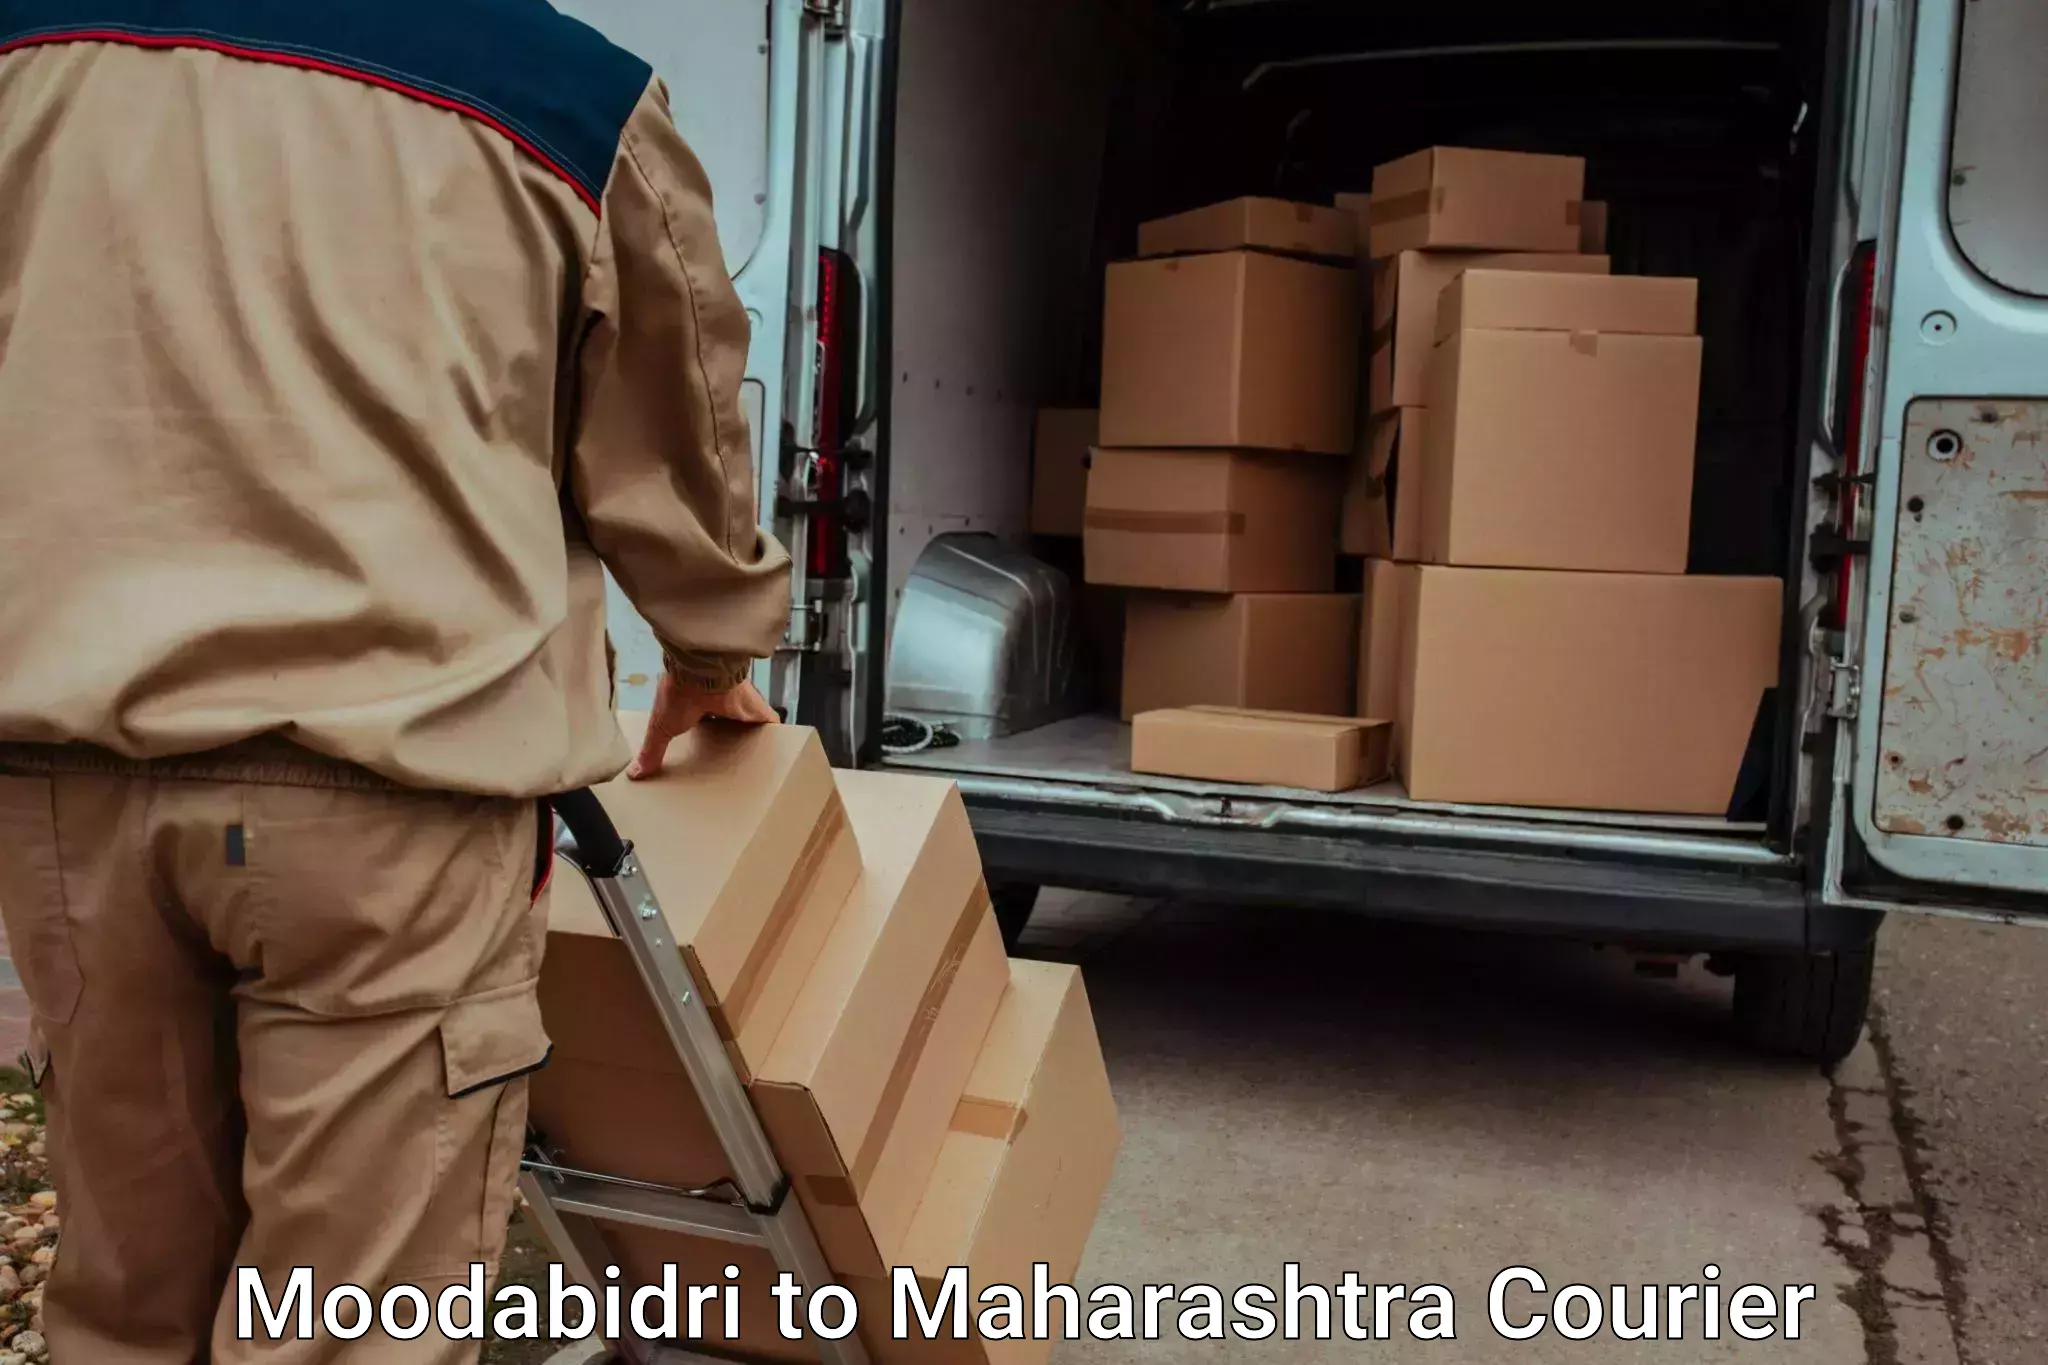 Trusted relocation experts Moodabidri to Vairag